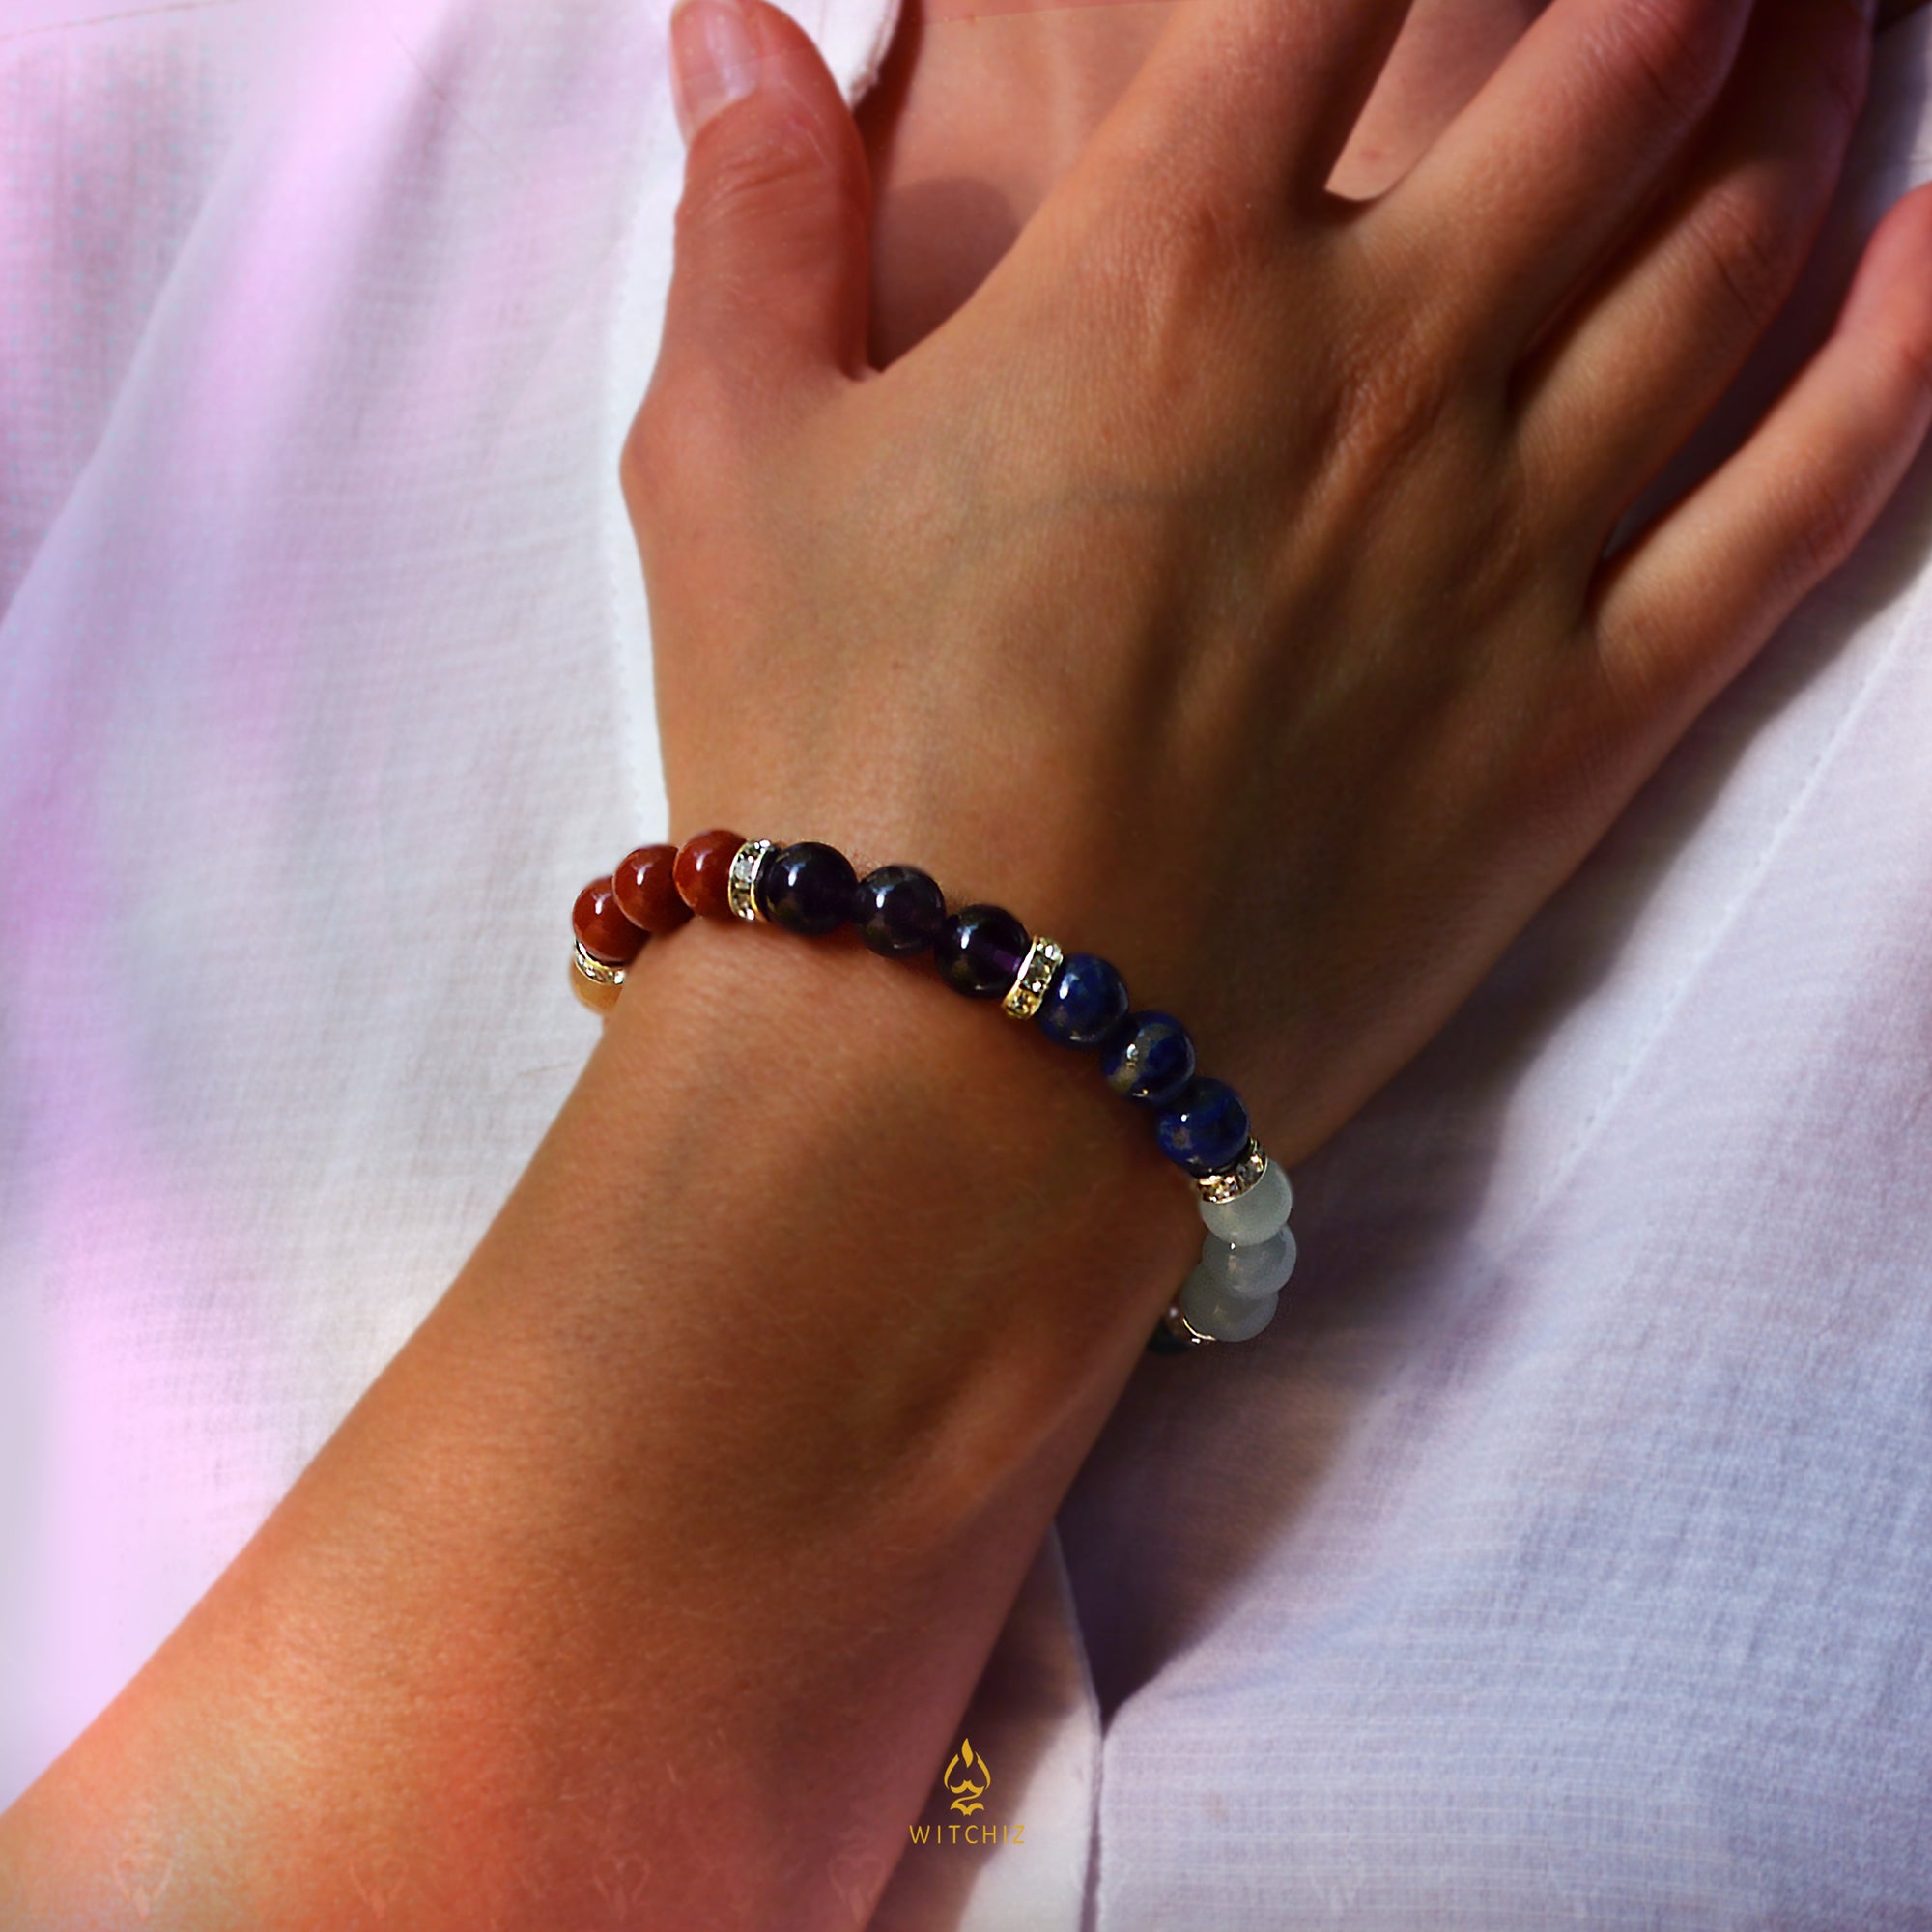 Bracelet de Meditation, Bracelet Chakras, Brcelet de Meditation Prix | Witchiz 